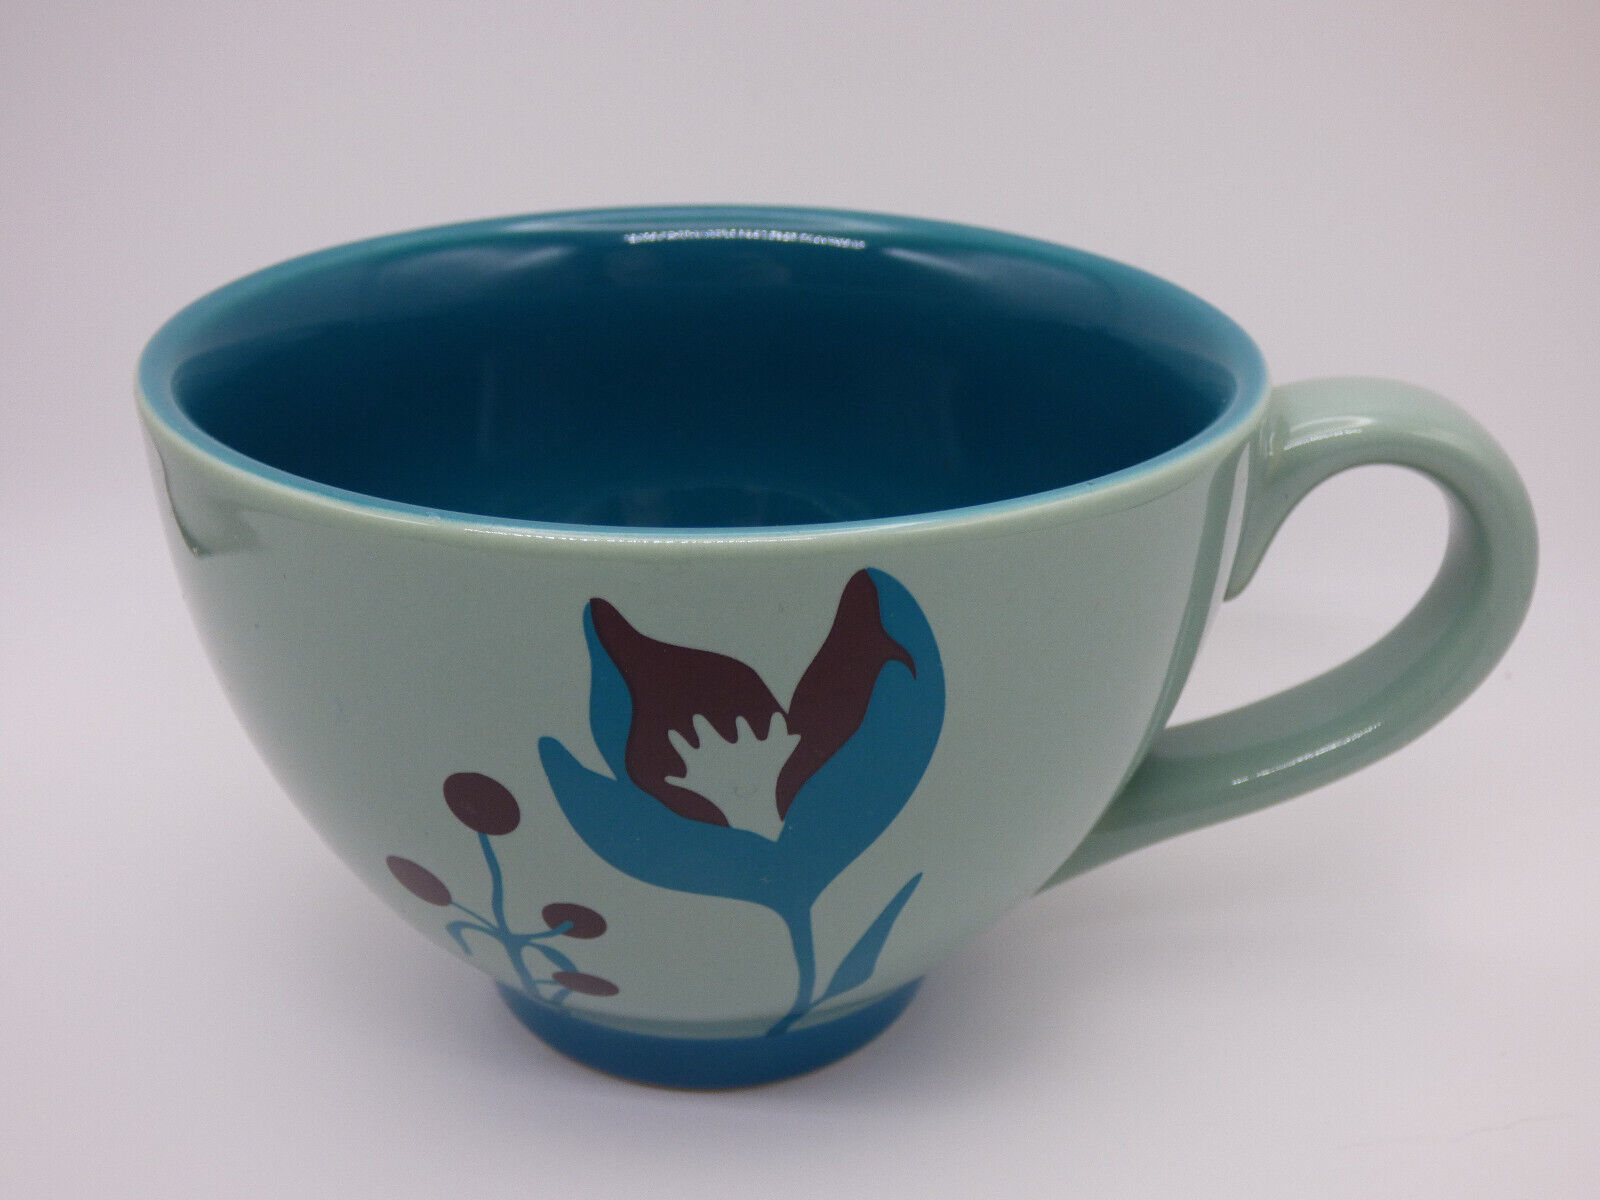 Starbucks - 2006 Floral Ceramic Mug - Blue / Teal - 12 oz